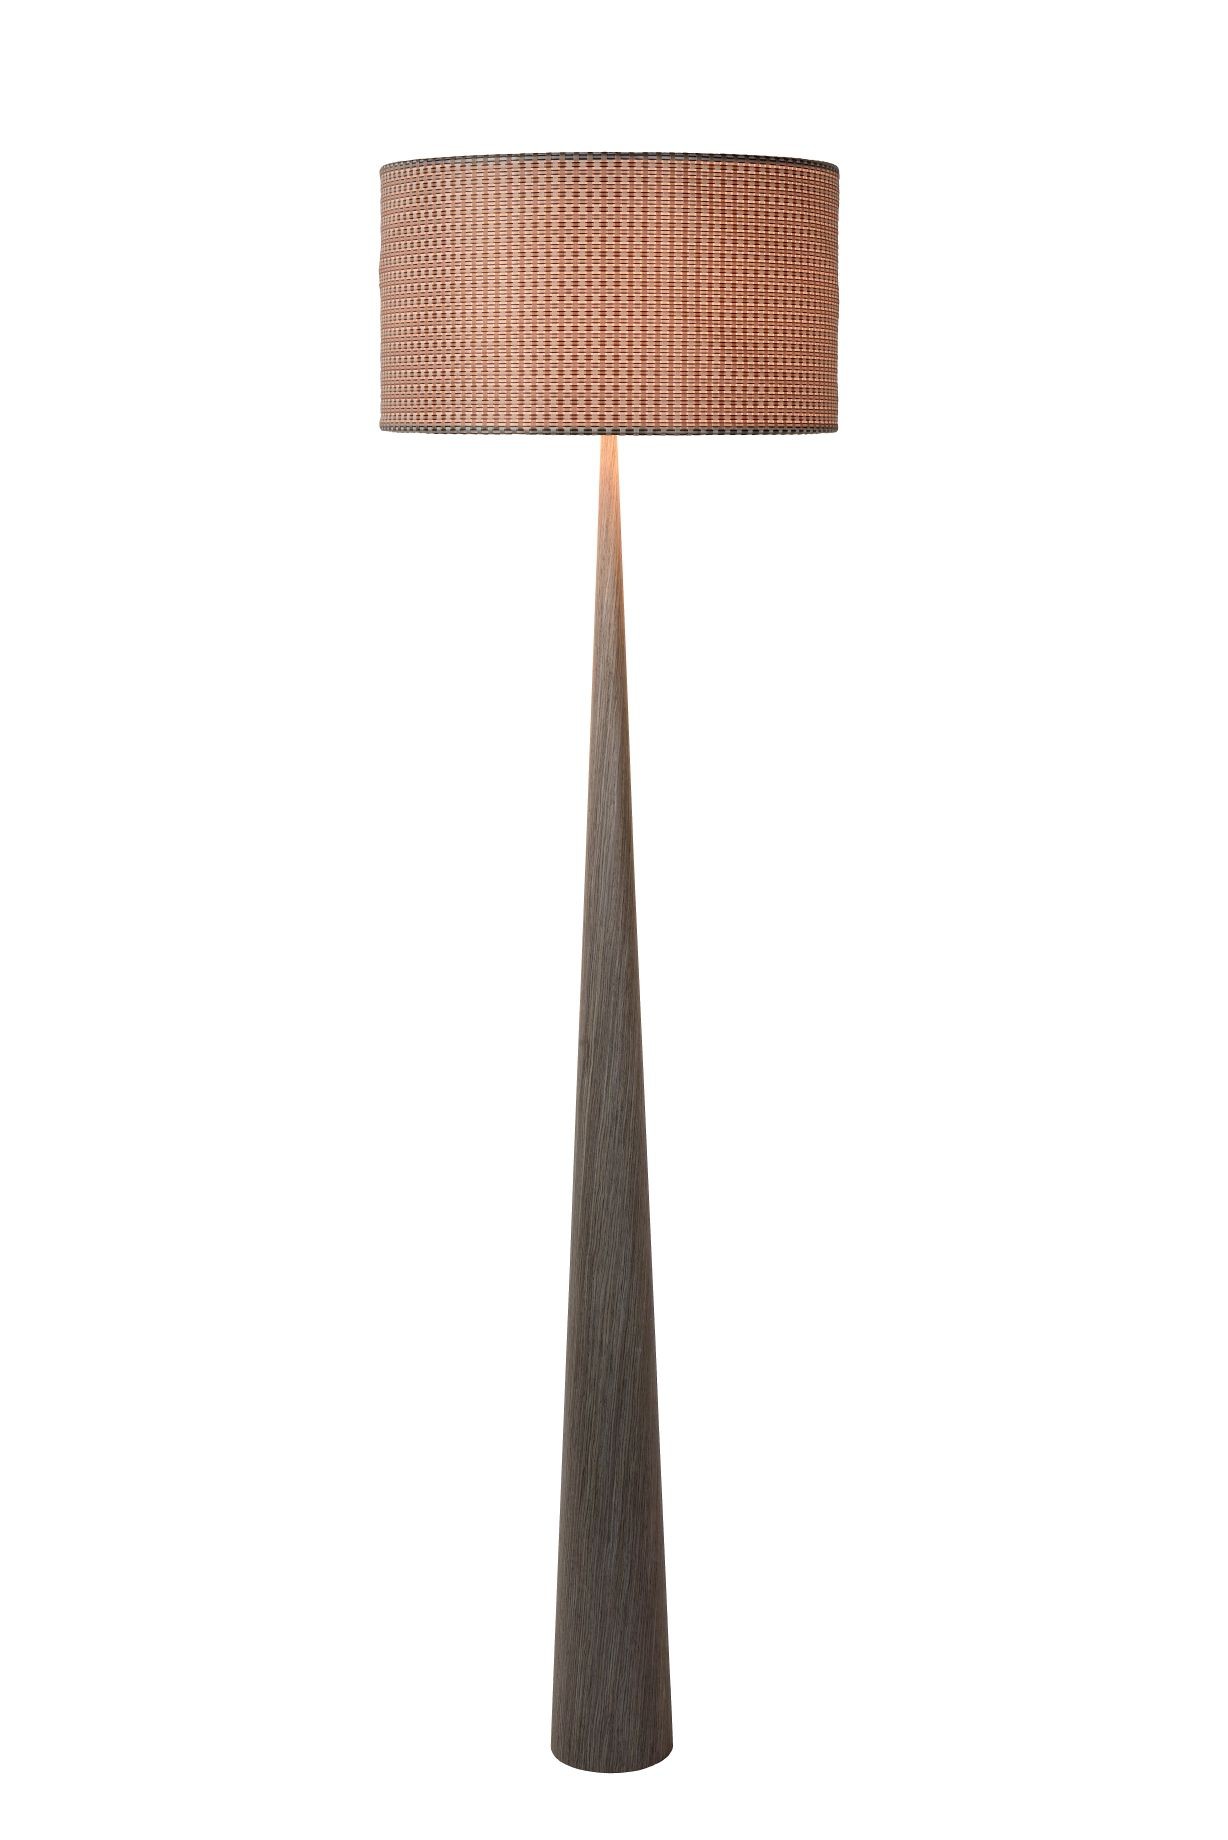 Stehleuchte / Stehlampe Holz, Höhe 177 cm 